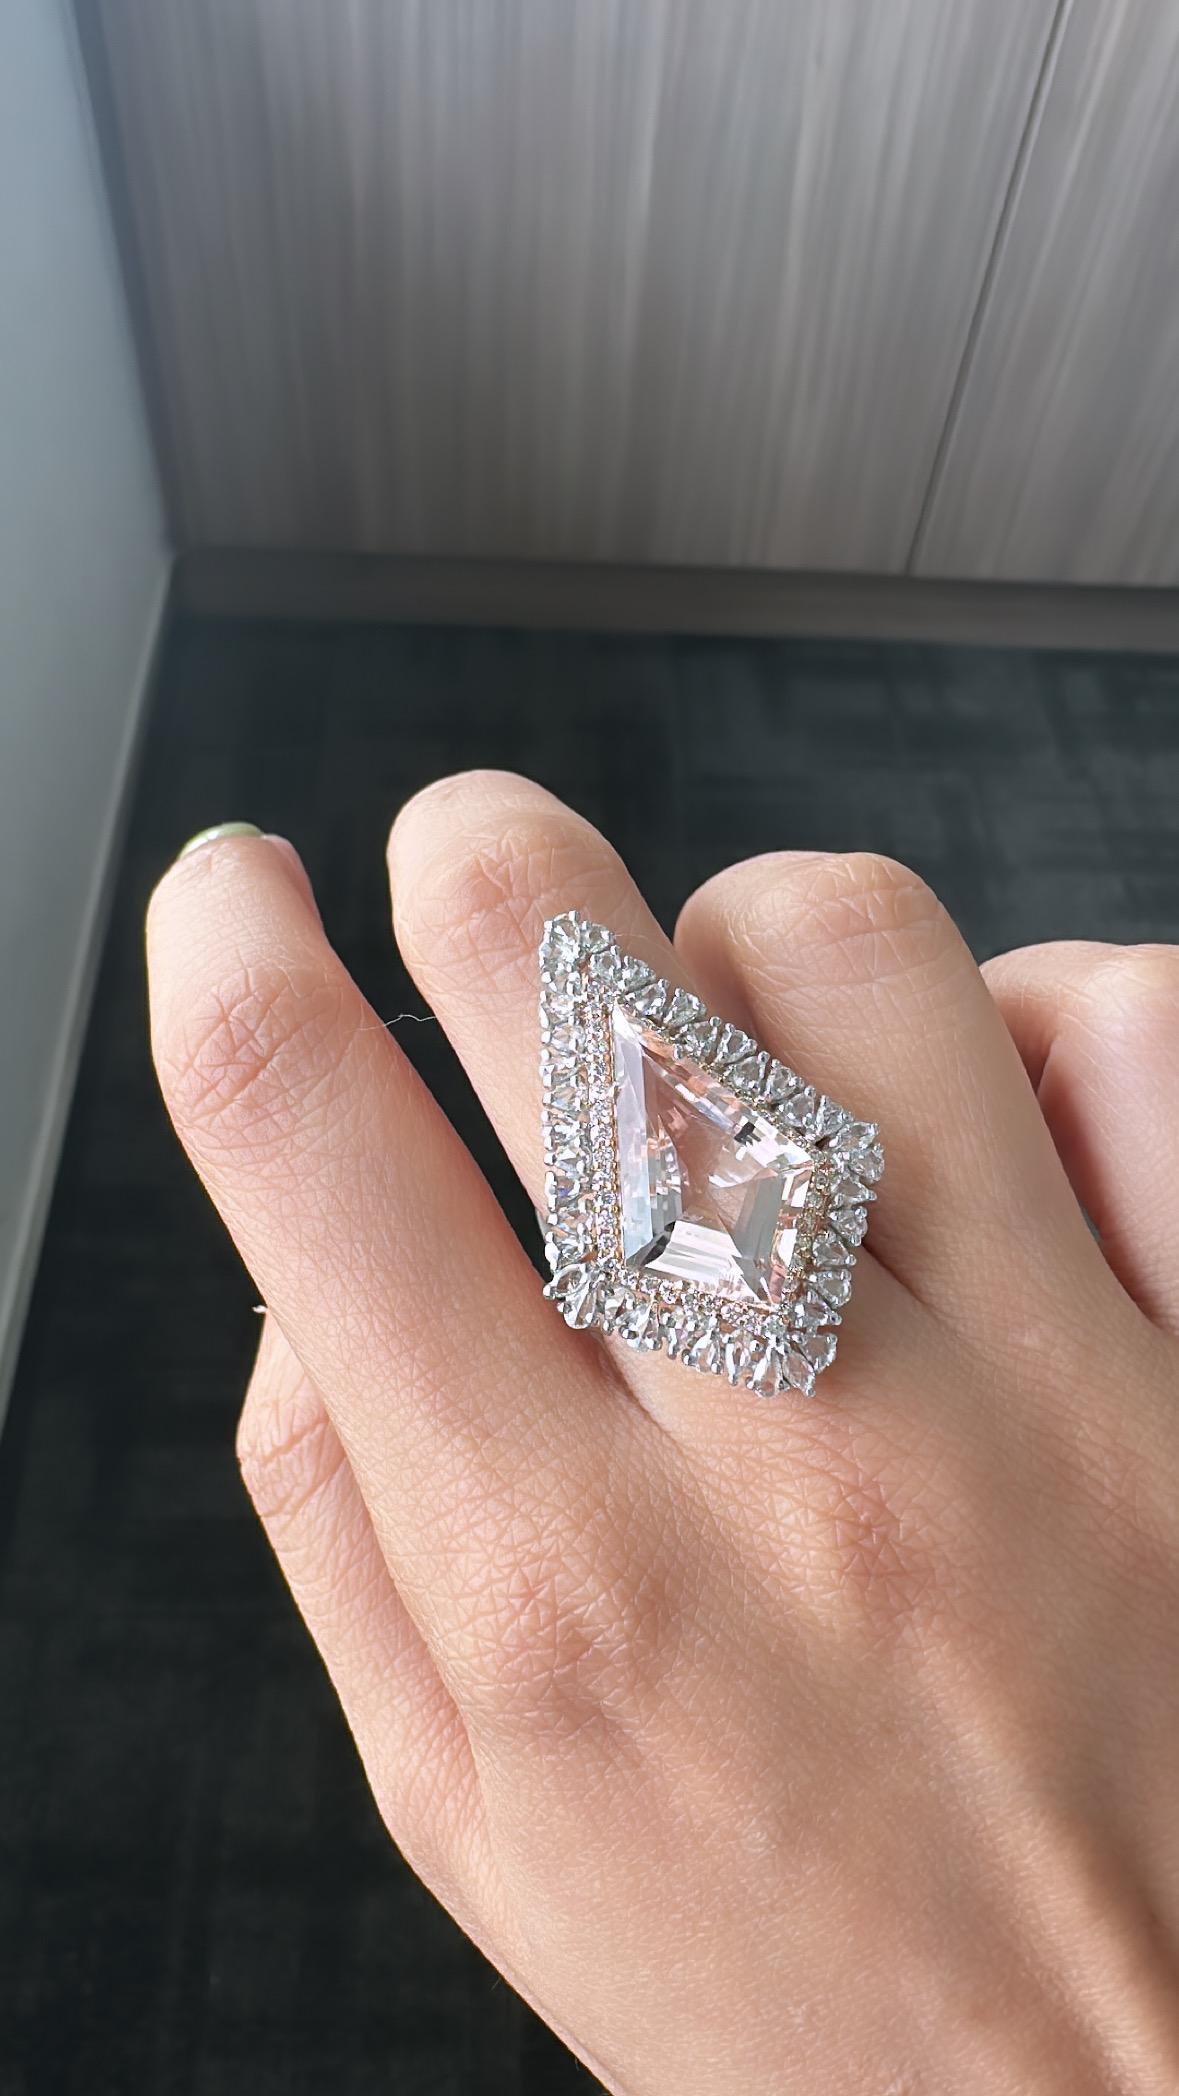 Set in 18K Gold, 8.76 carats Kite cut Morganite & Rose Cut Diamond Cocktail Ring For Sale 1